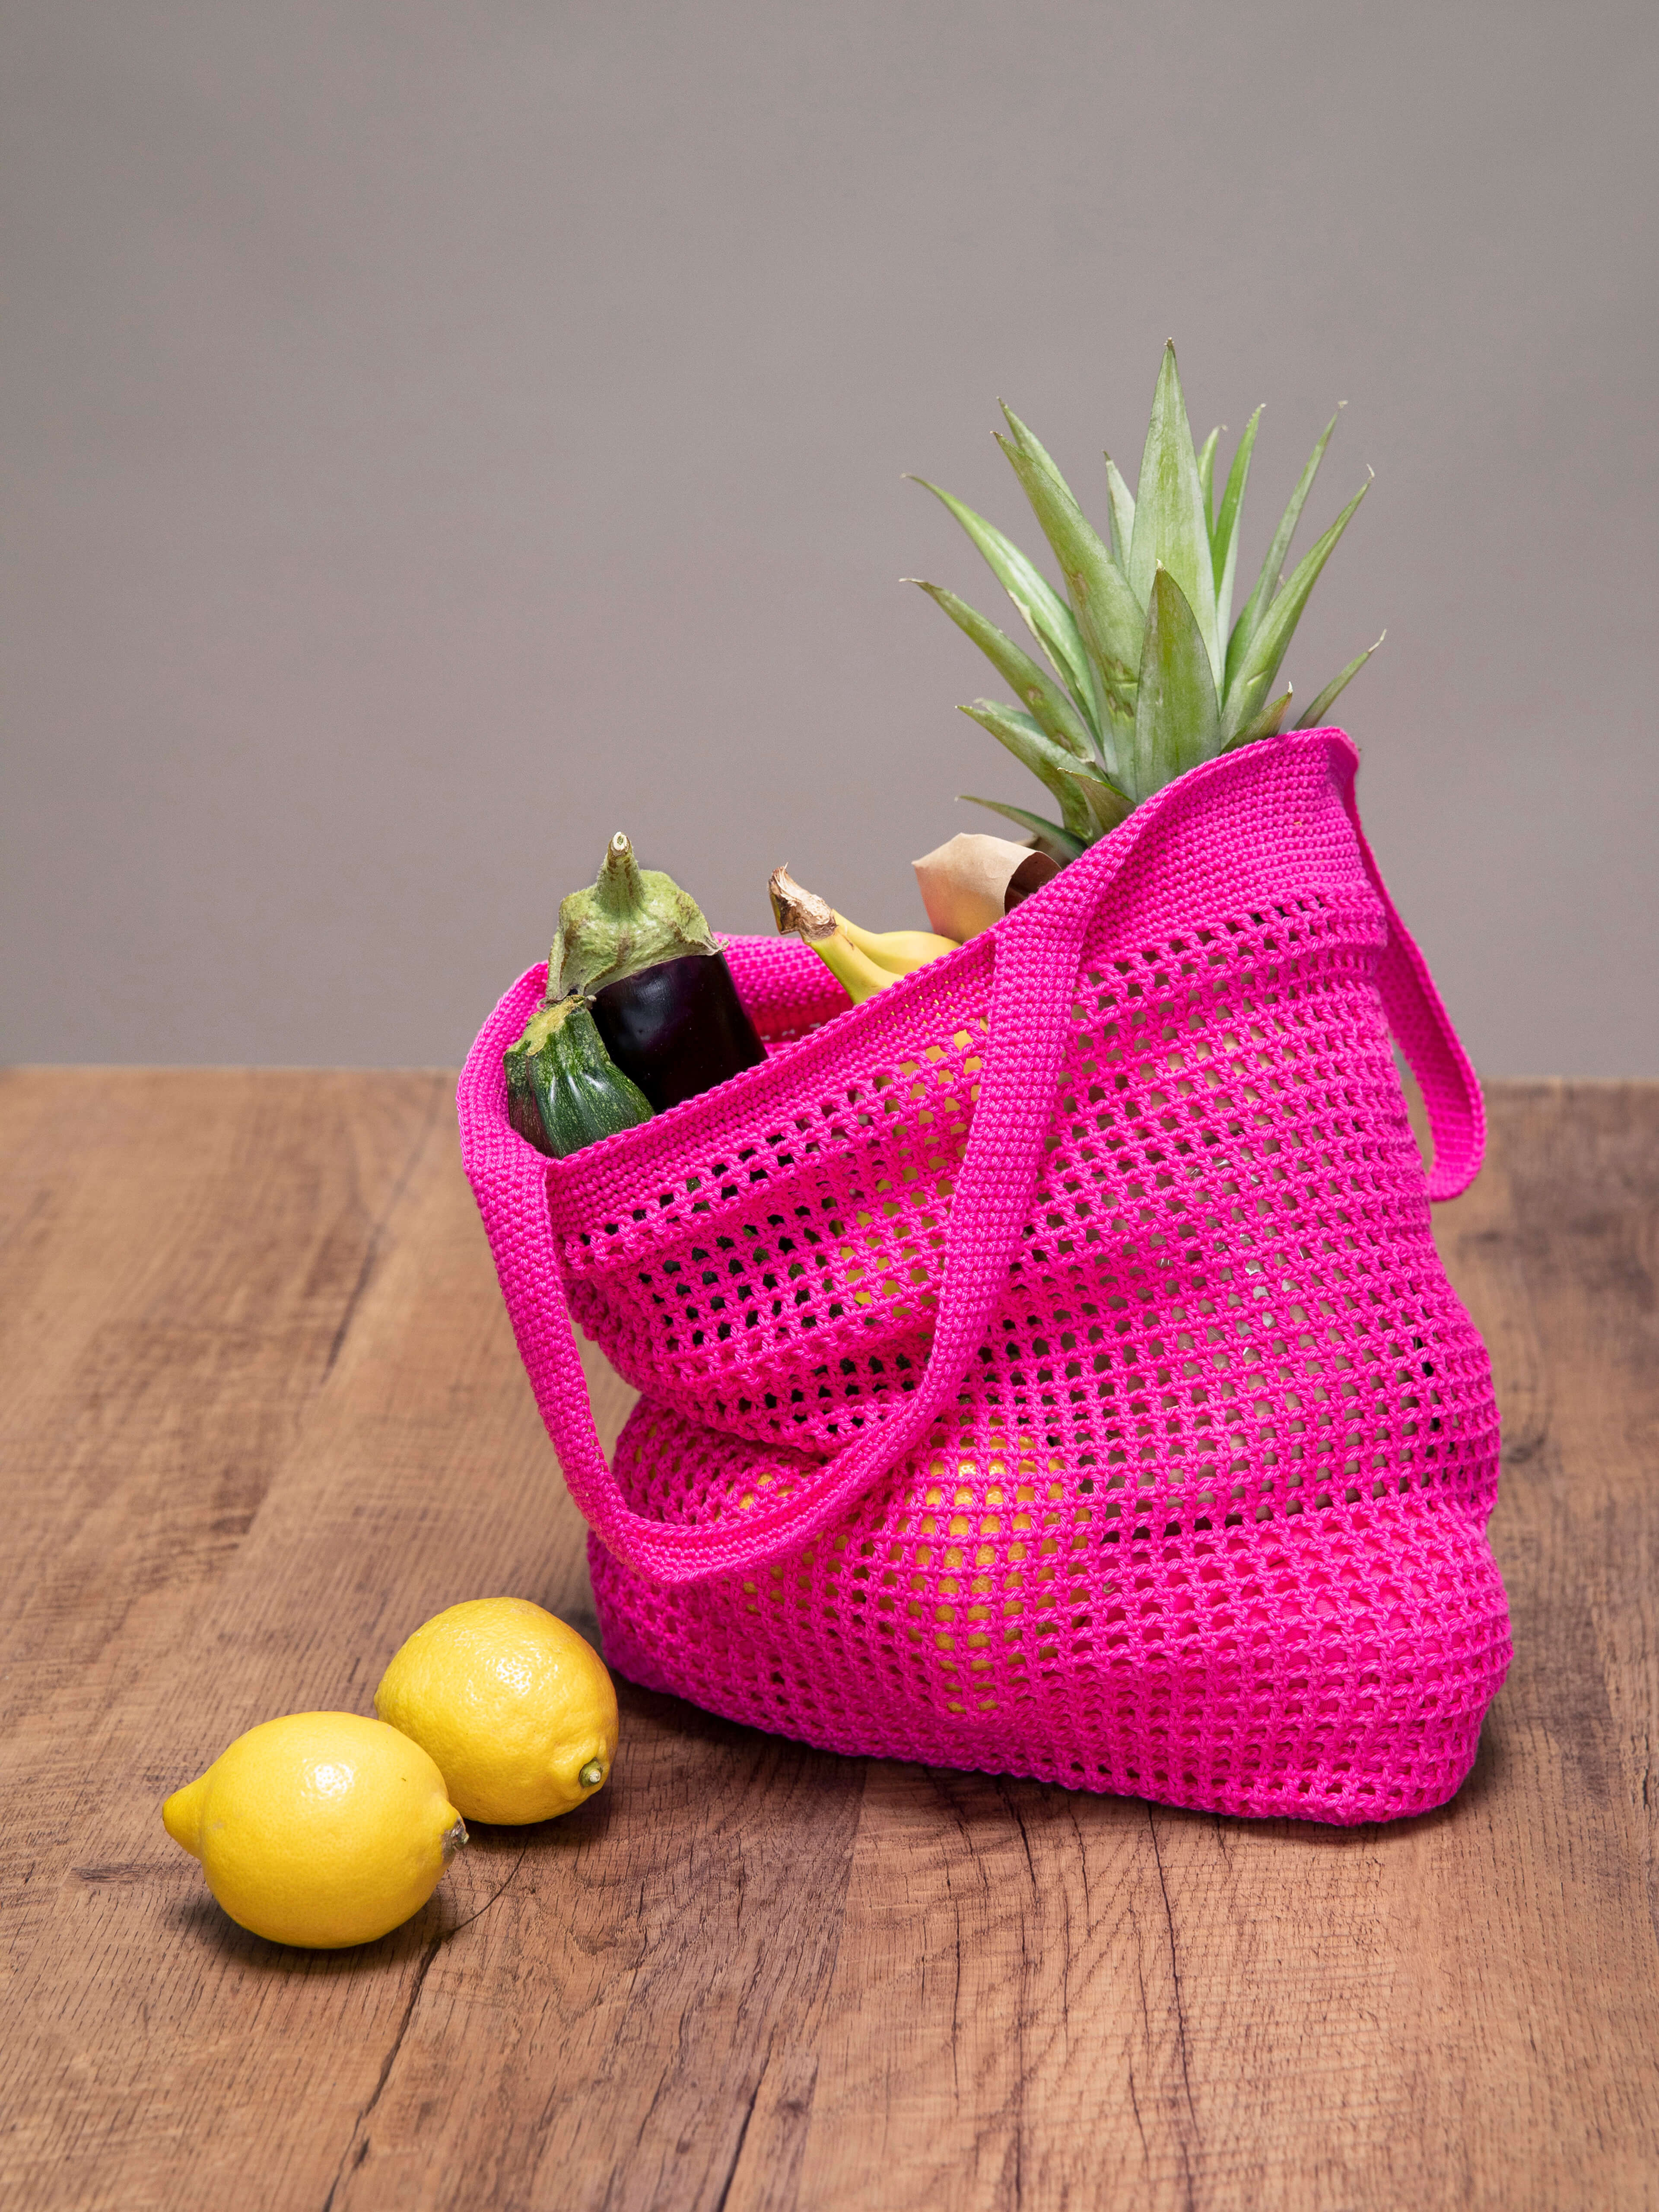 Shopping Bag and Produce Bag